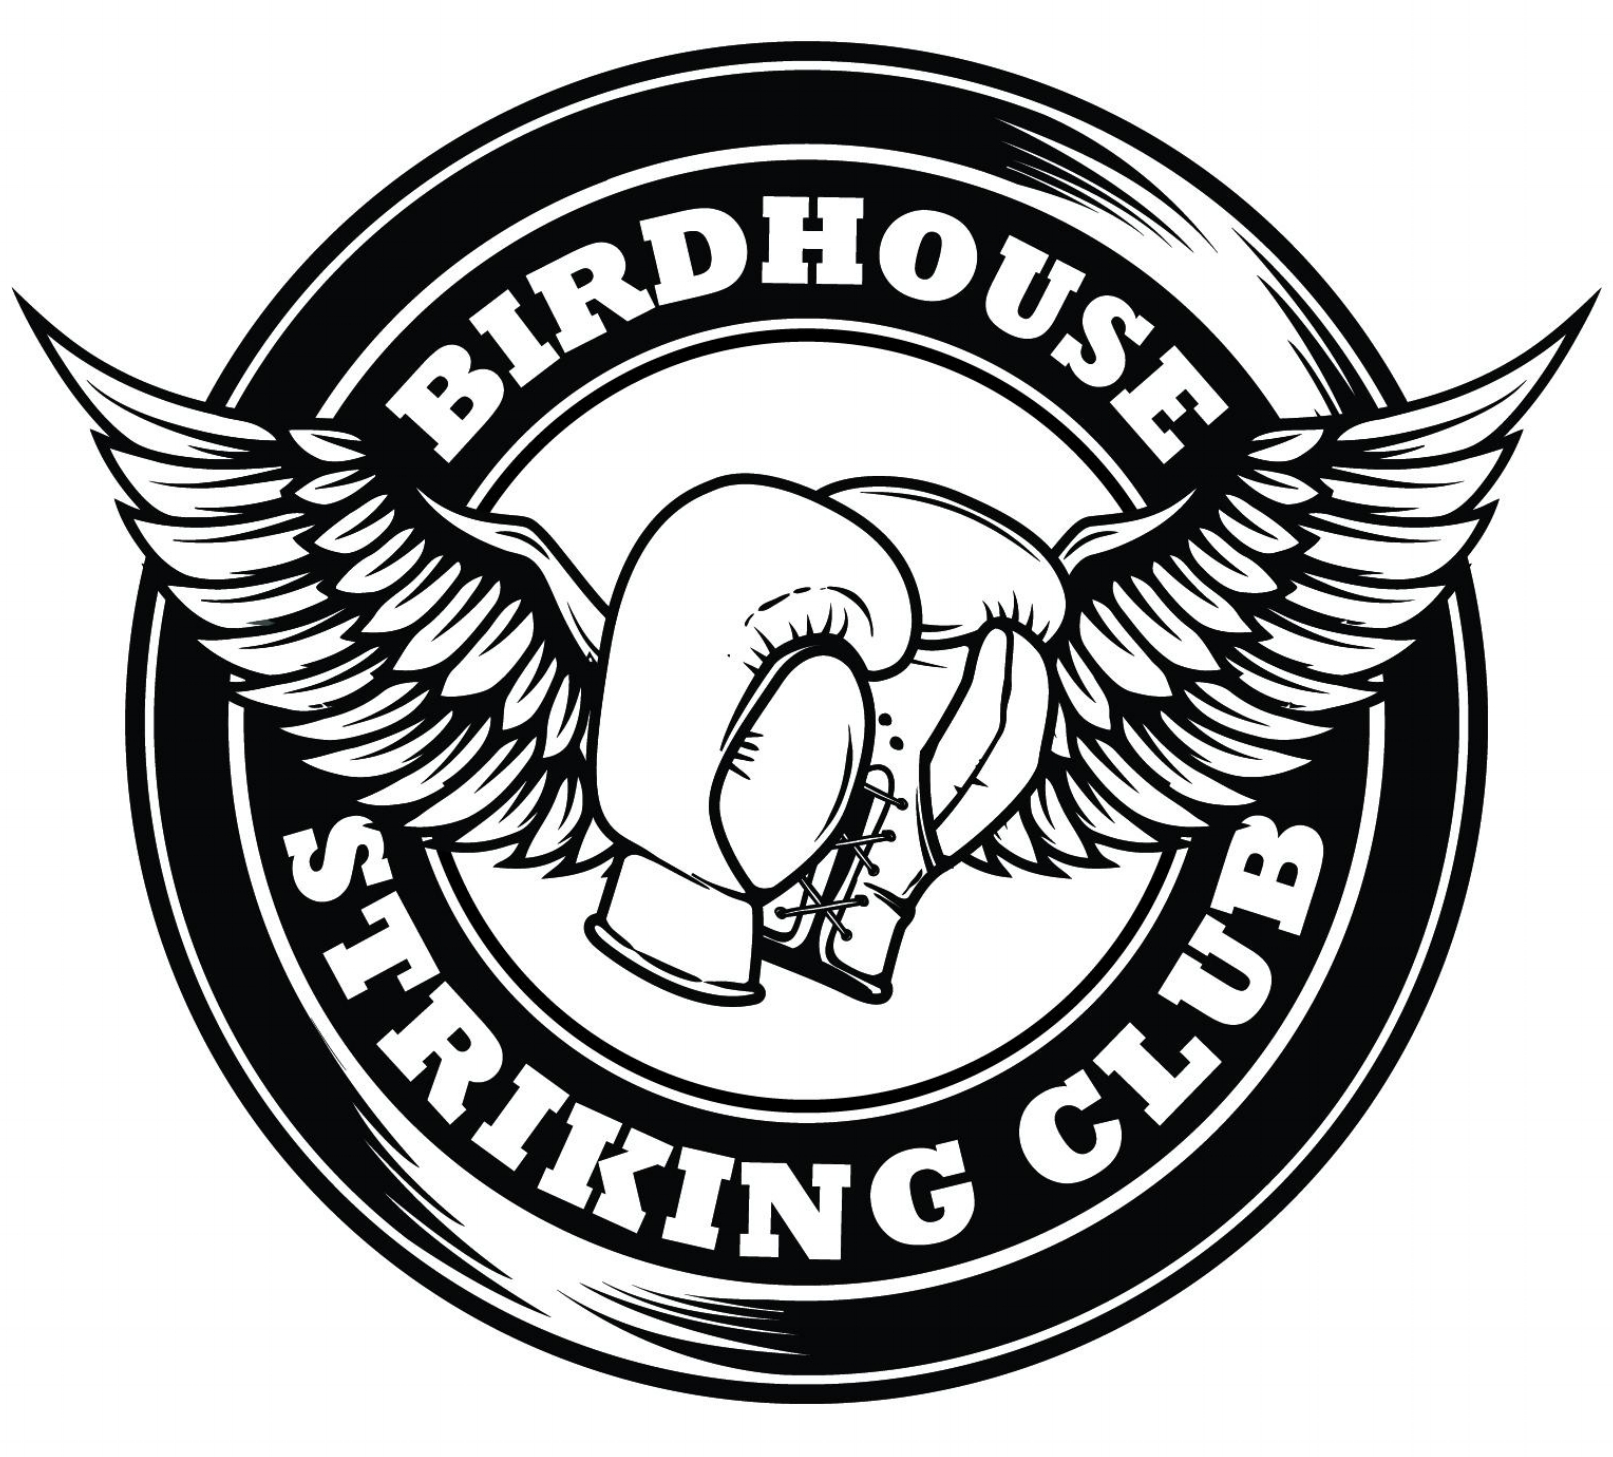 BirdhouseSC: Abbotsford Muaythai MMA Health